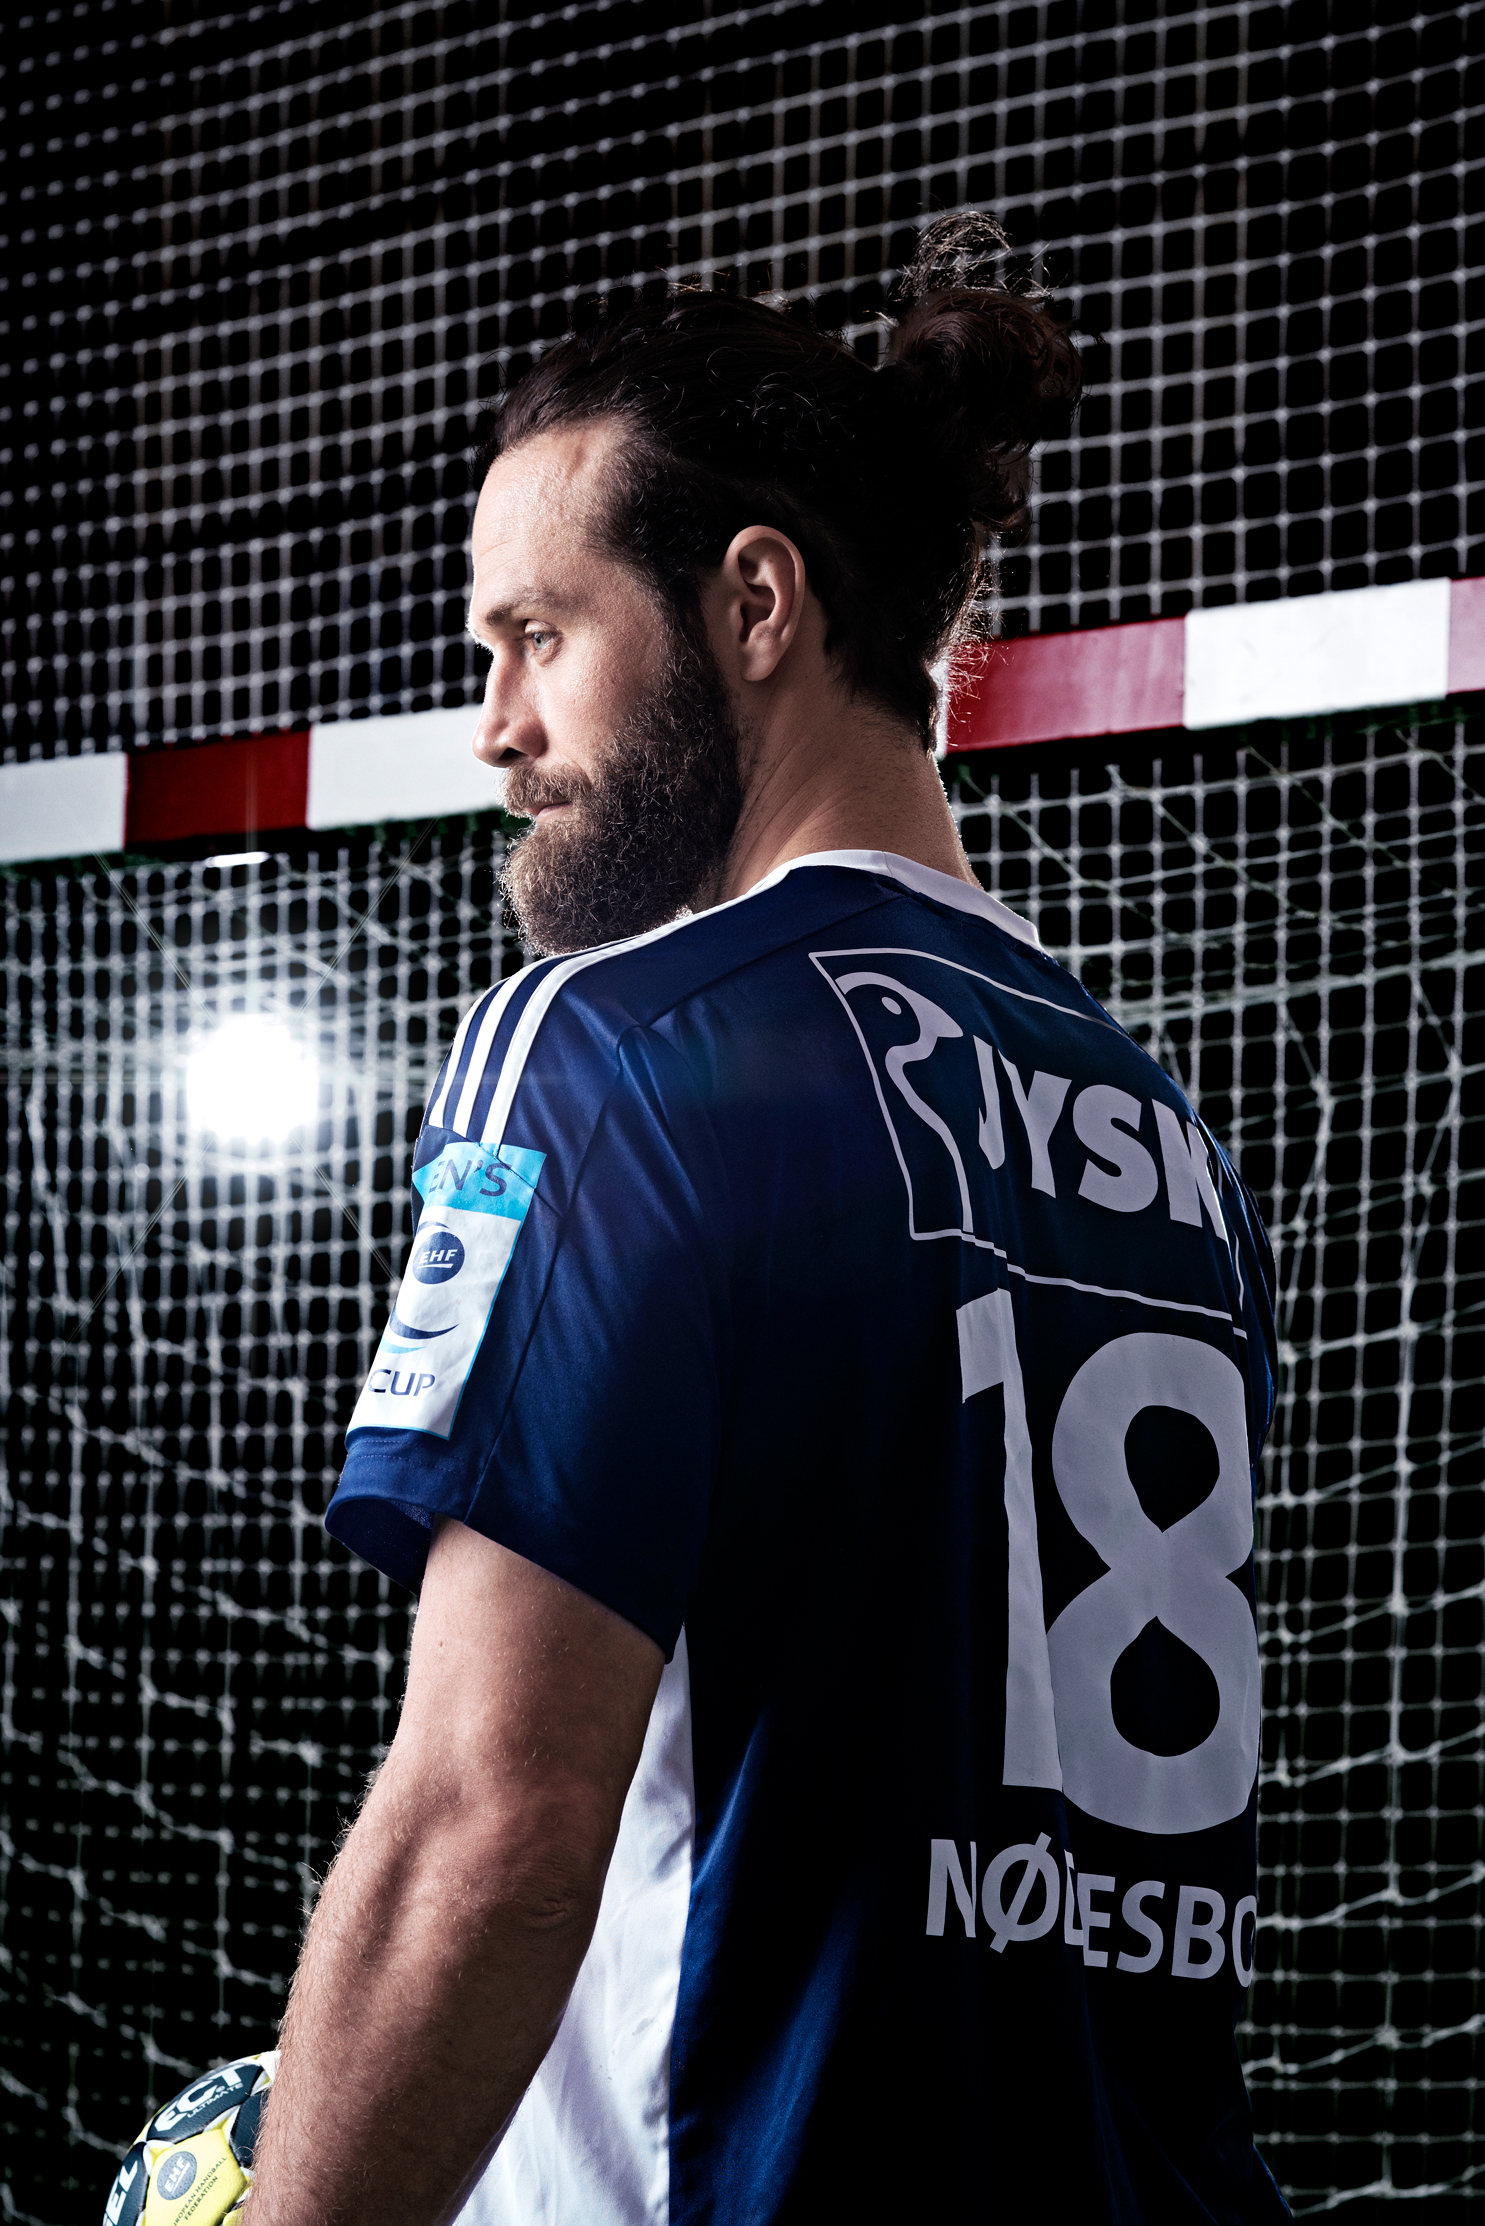 Jesper Nøddesbo, Handball player